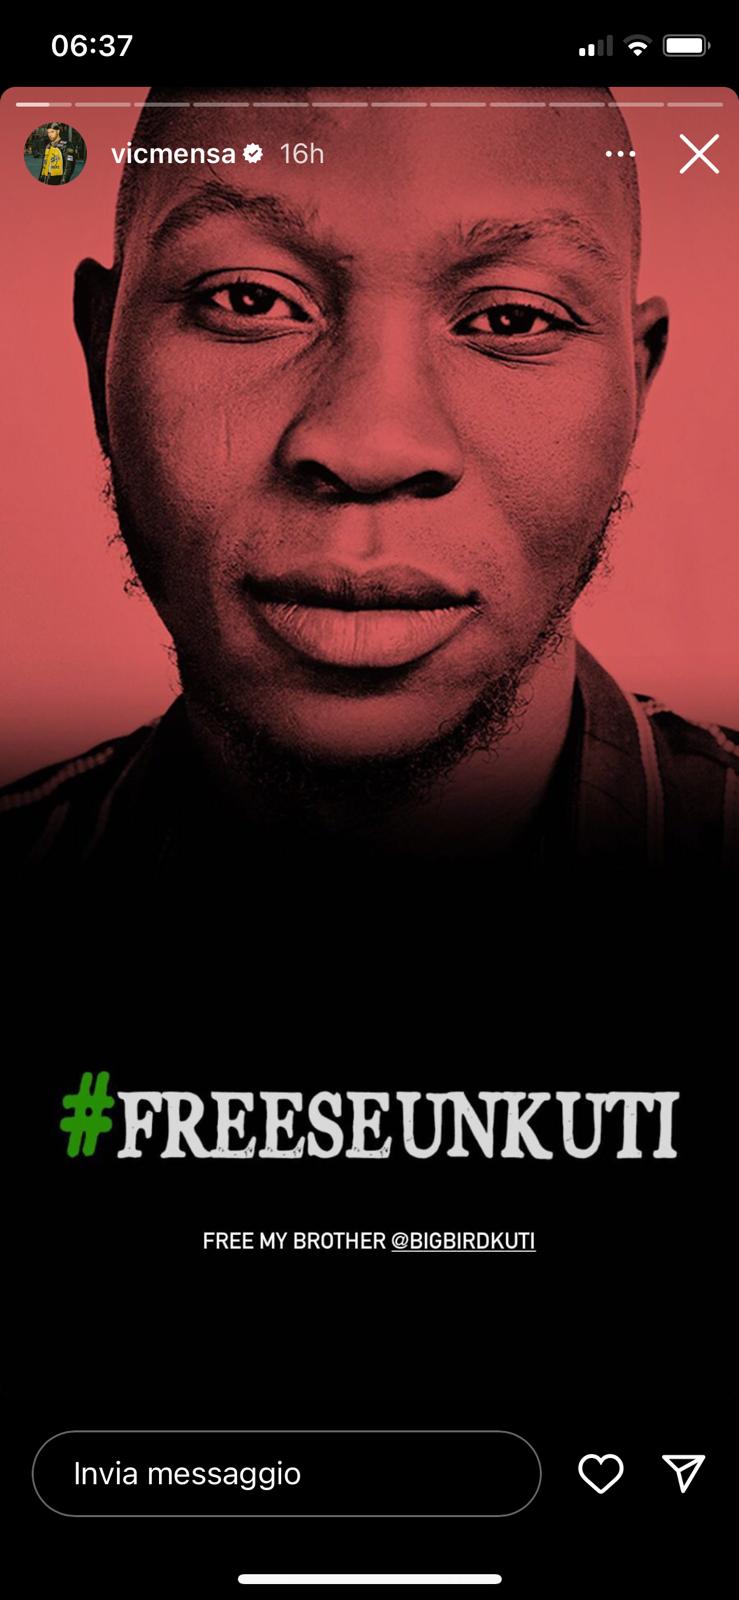 Global Musician Join #FreeSeunKuti Campaign